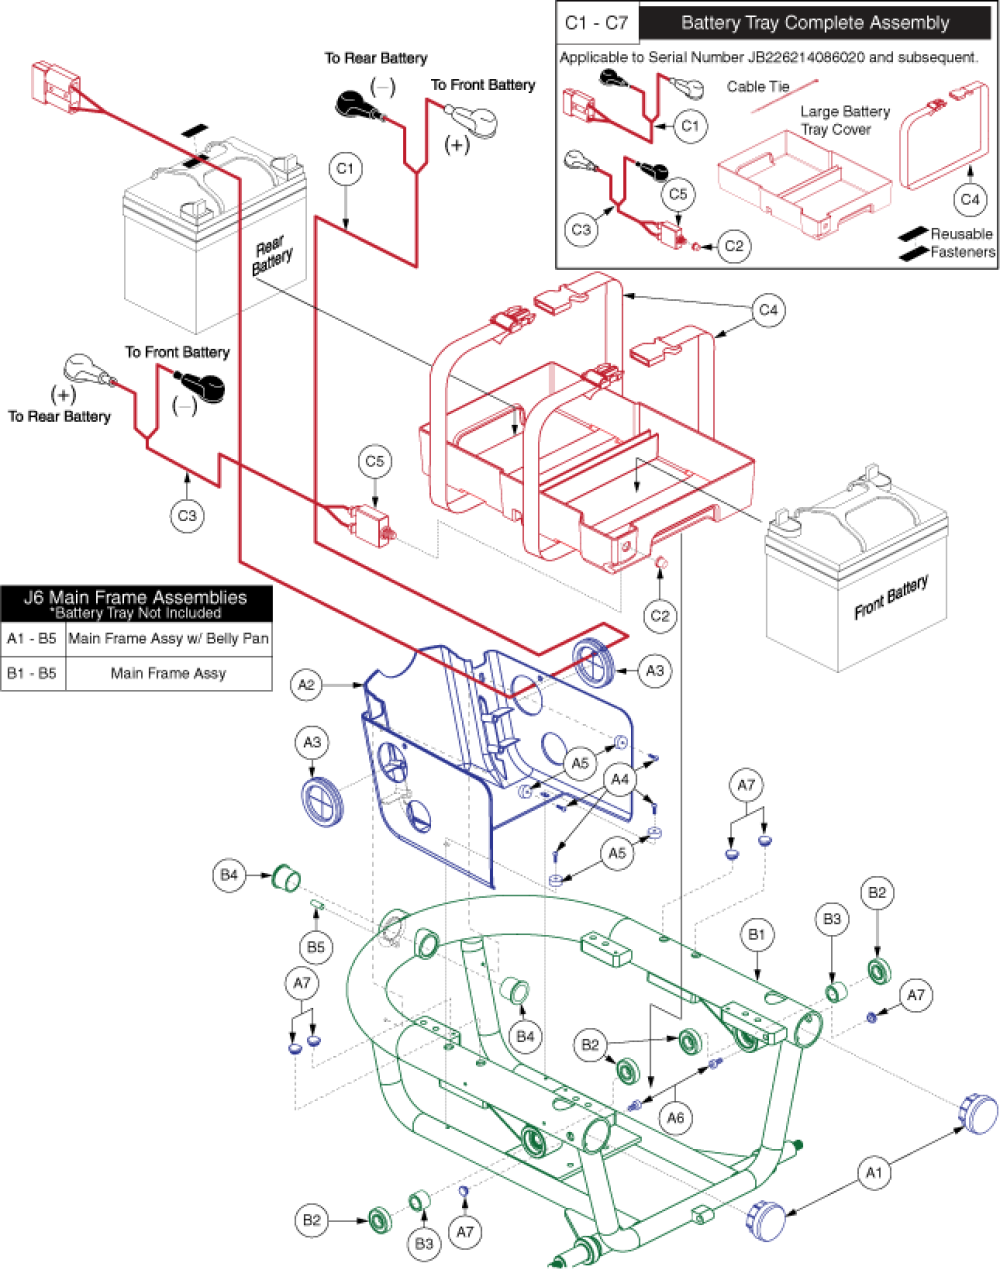 Main Frame Assembly - Standard parts diagram